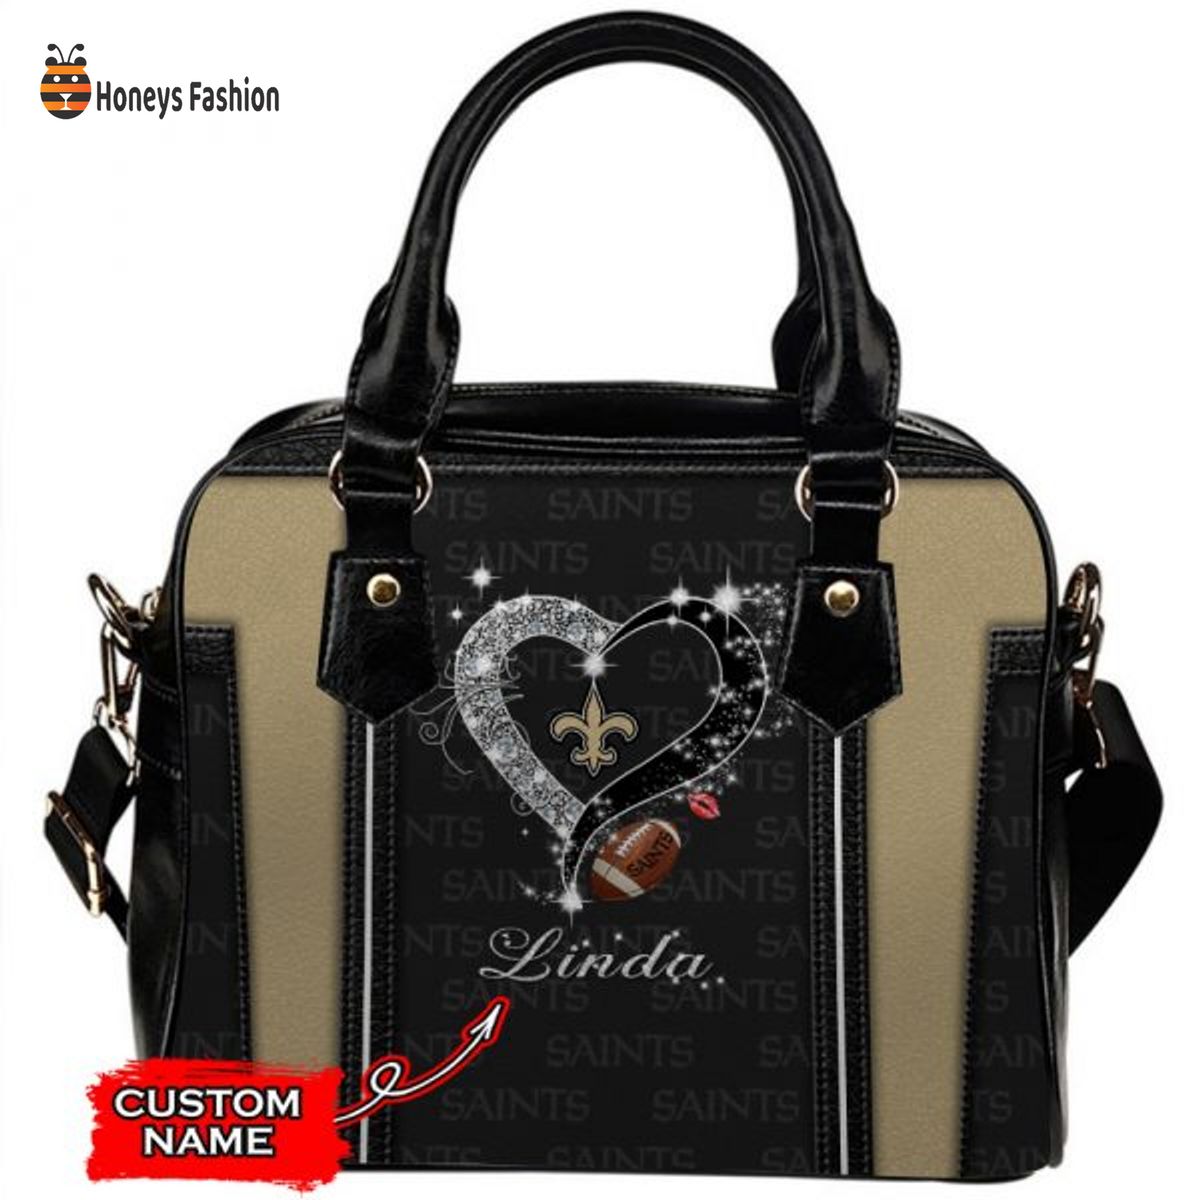 New Orleans Saints NFL Custom Name Leather Handbag Tote bag